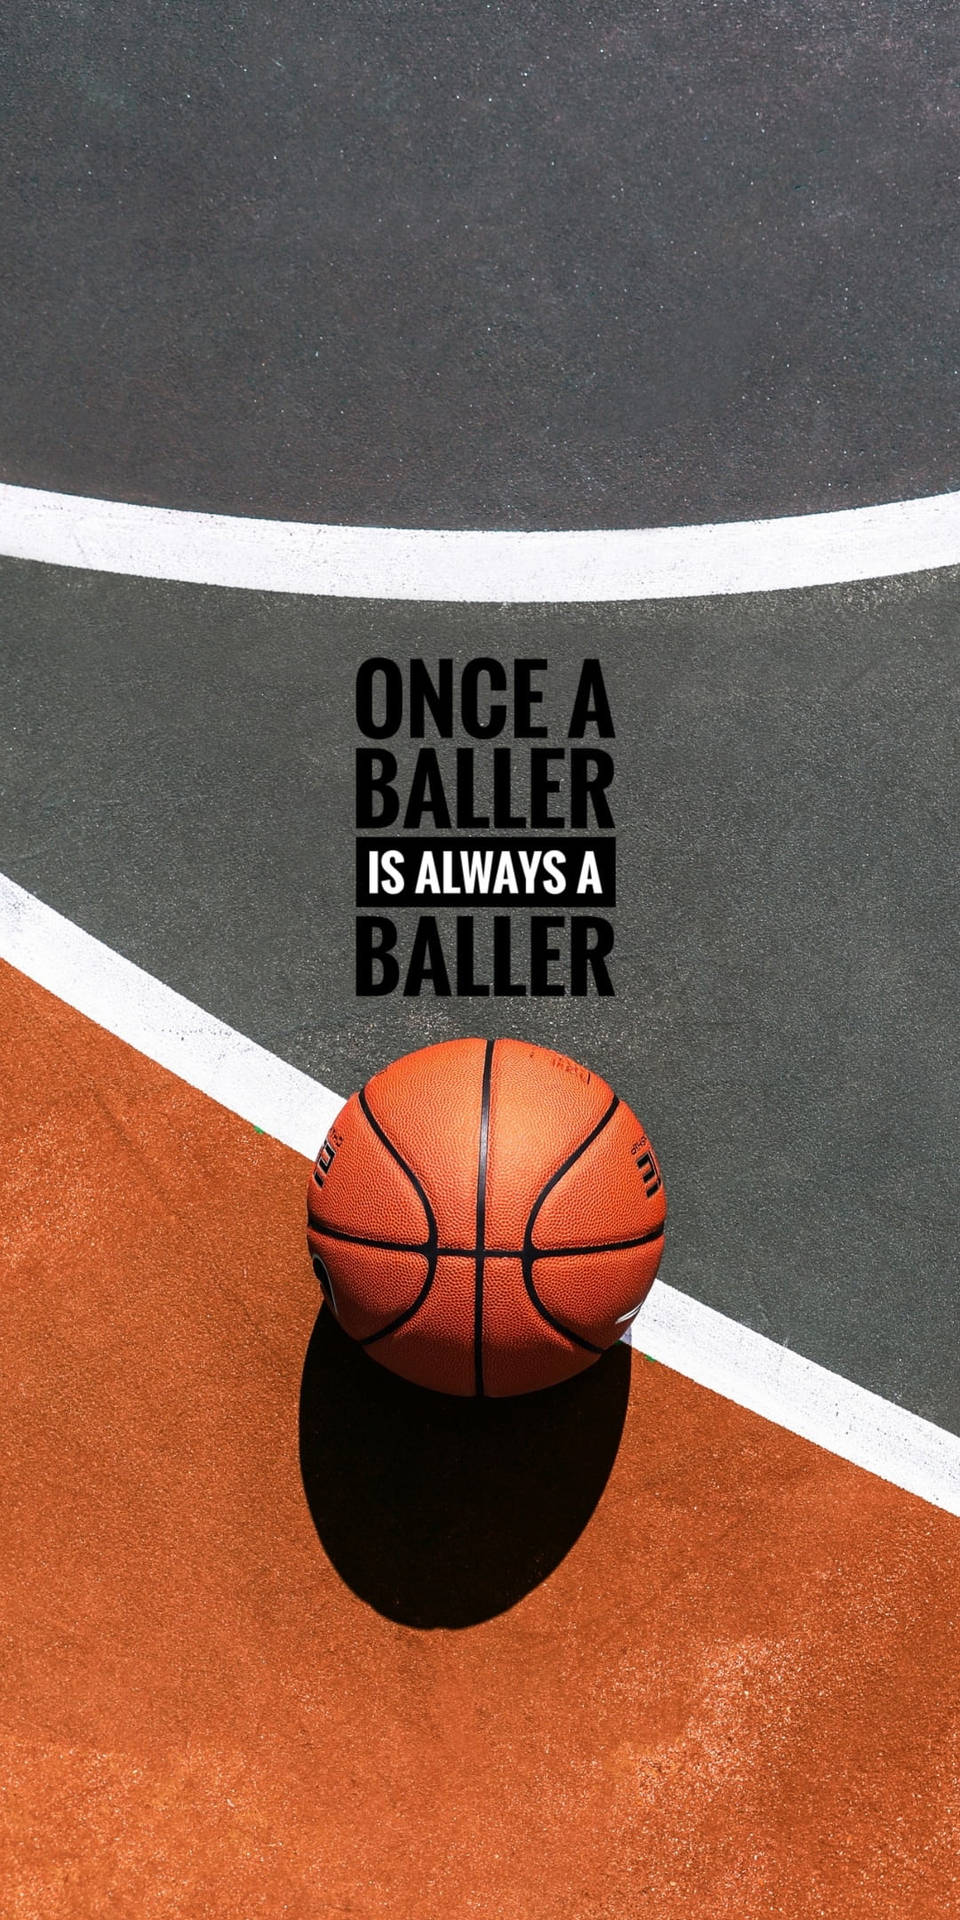 Basketball Motivation En Gang En Baller Wallpaper